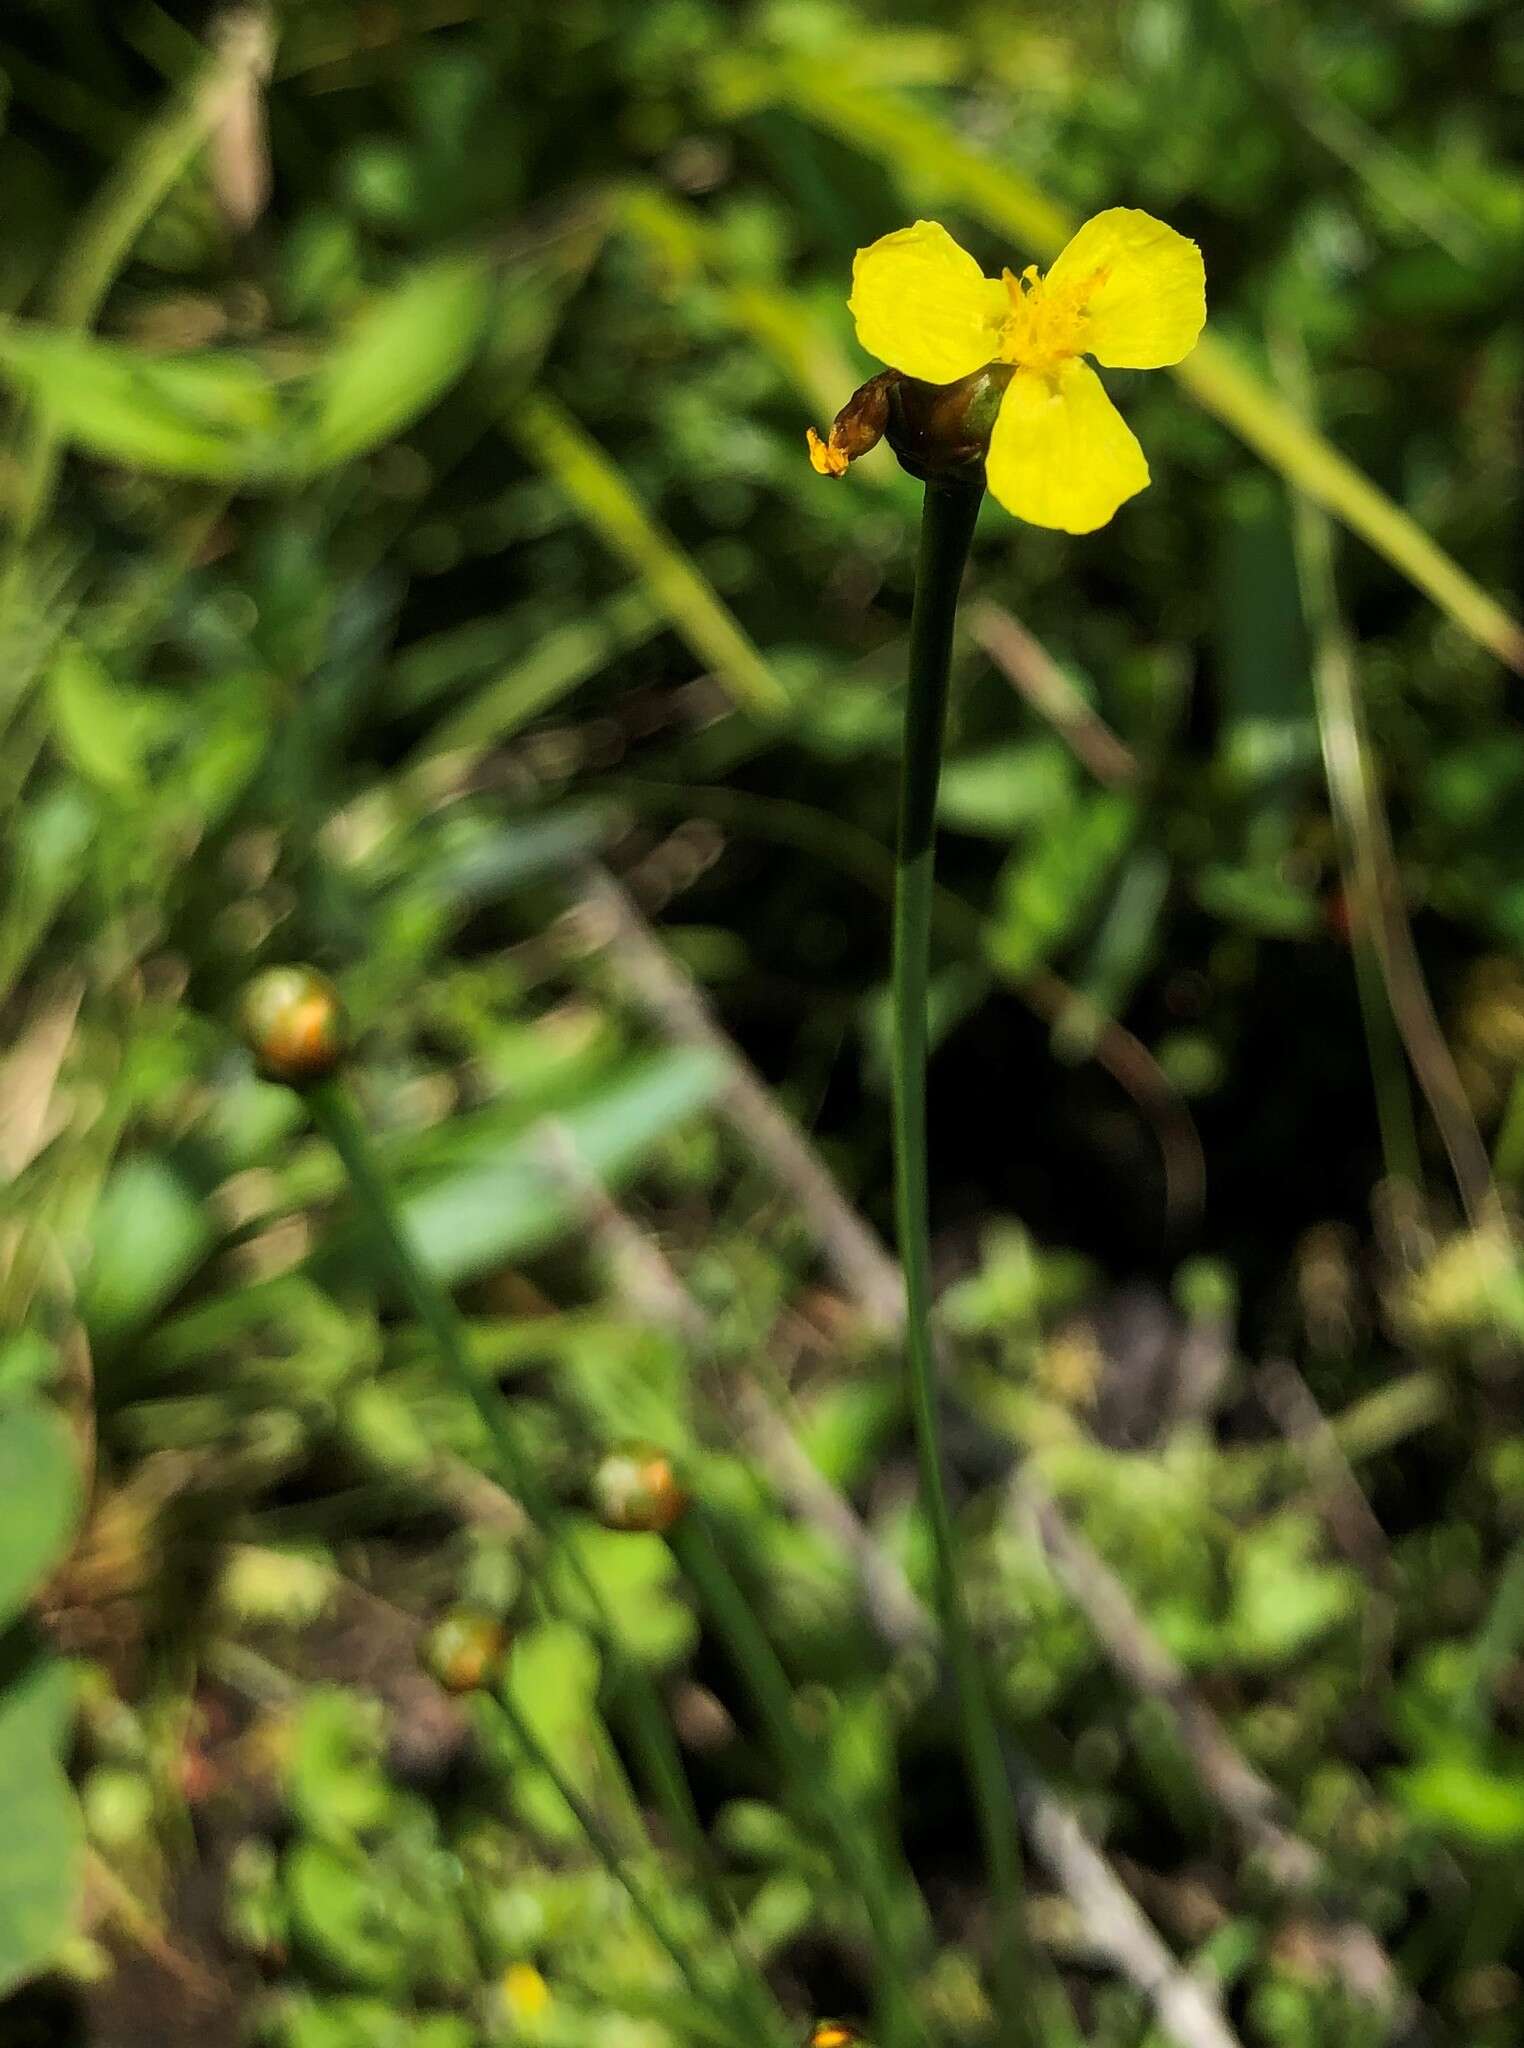 Image of bog yelloweyed grass